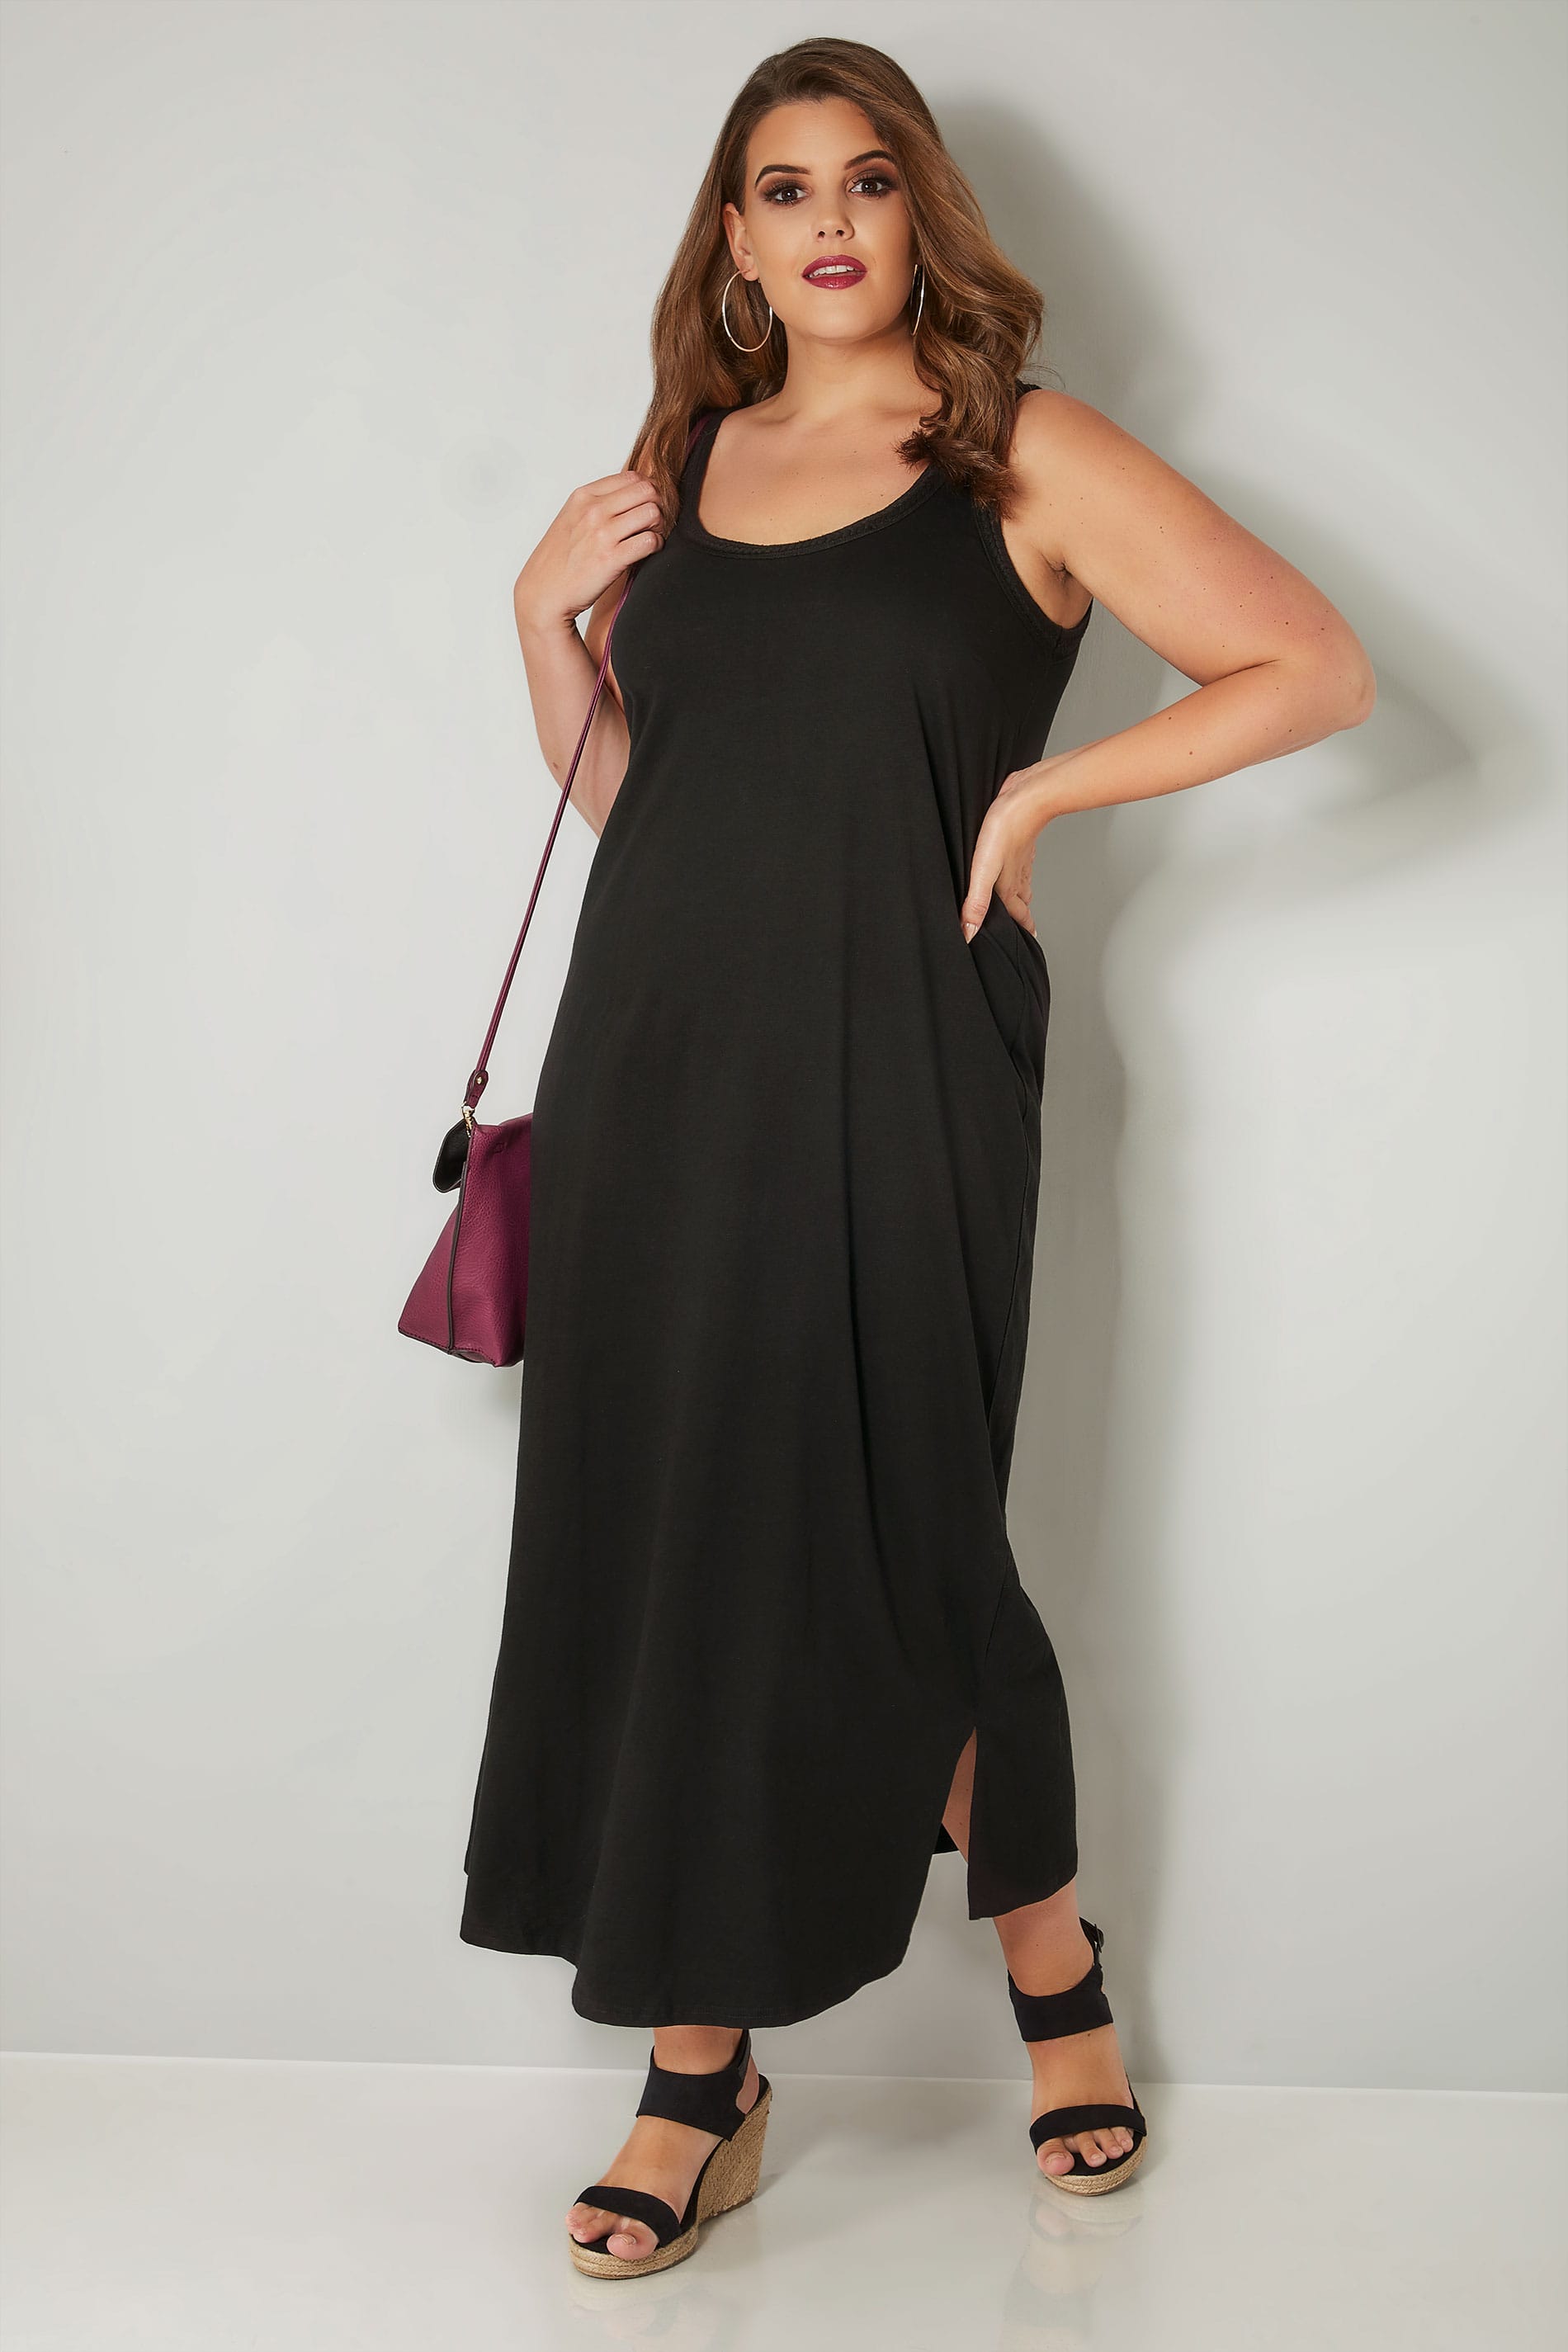 Black Sleeveless Maxi Dress With Plait Trim, Plus size 16 to 36